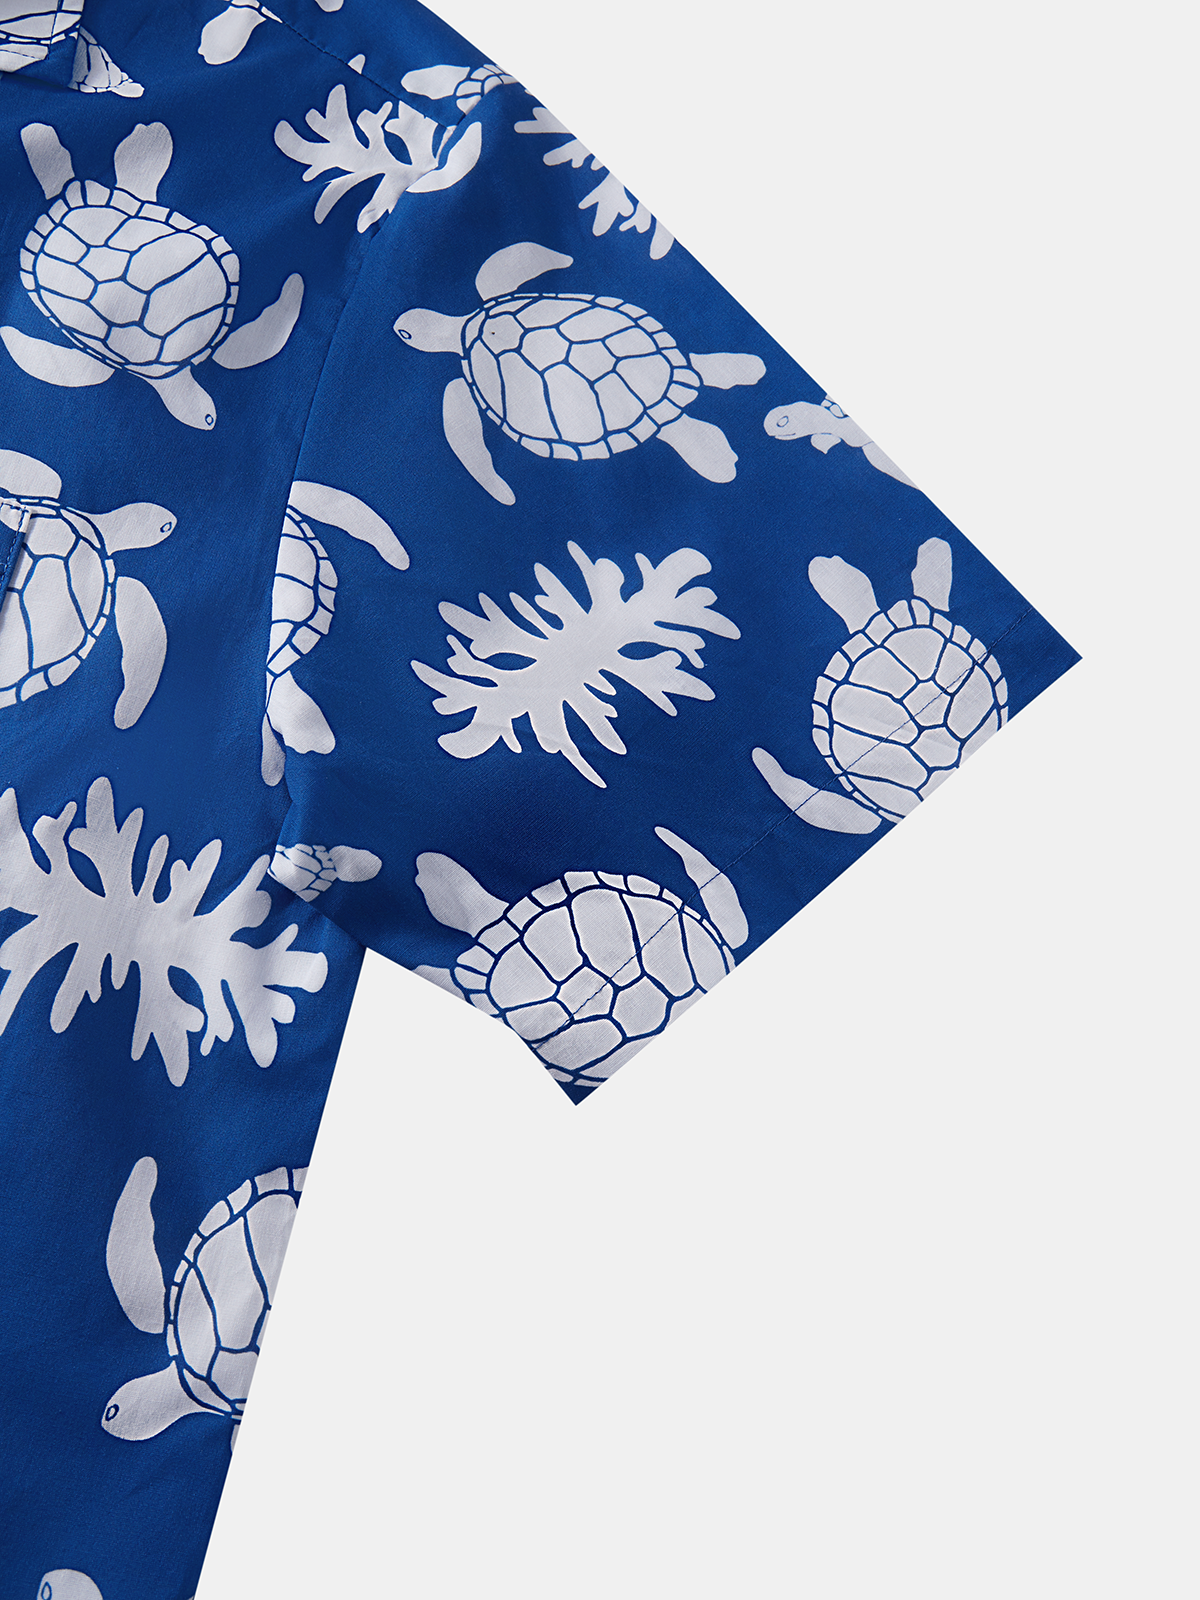 Hardaddy® Cotton Sea Turtle Aloha Shirt